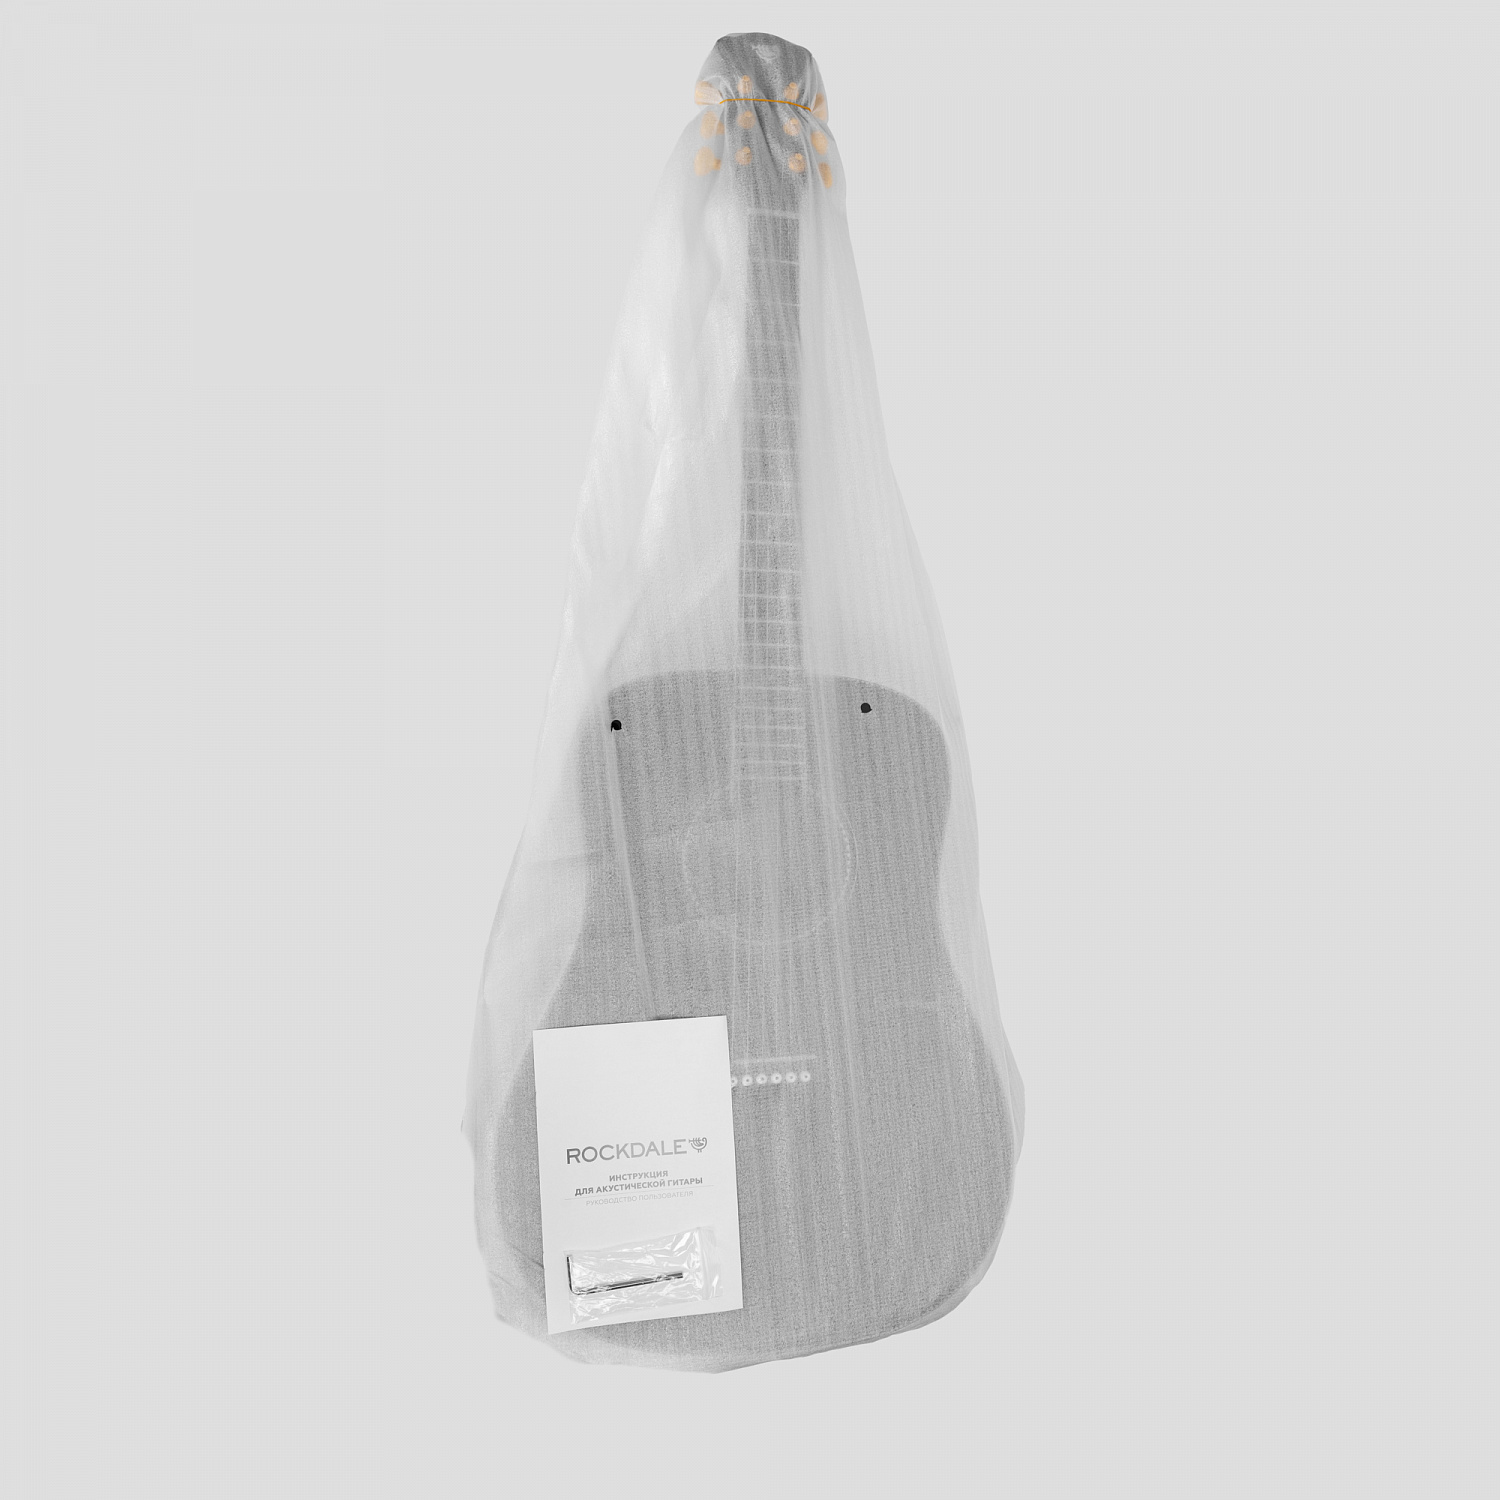 Rockdale Aurora D7 BK Gloss акустическая гитара дредноут, цвет черный, глянцевое покрытие